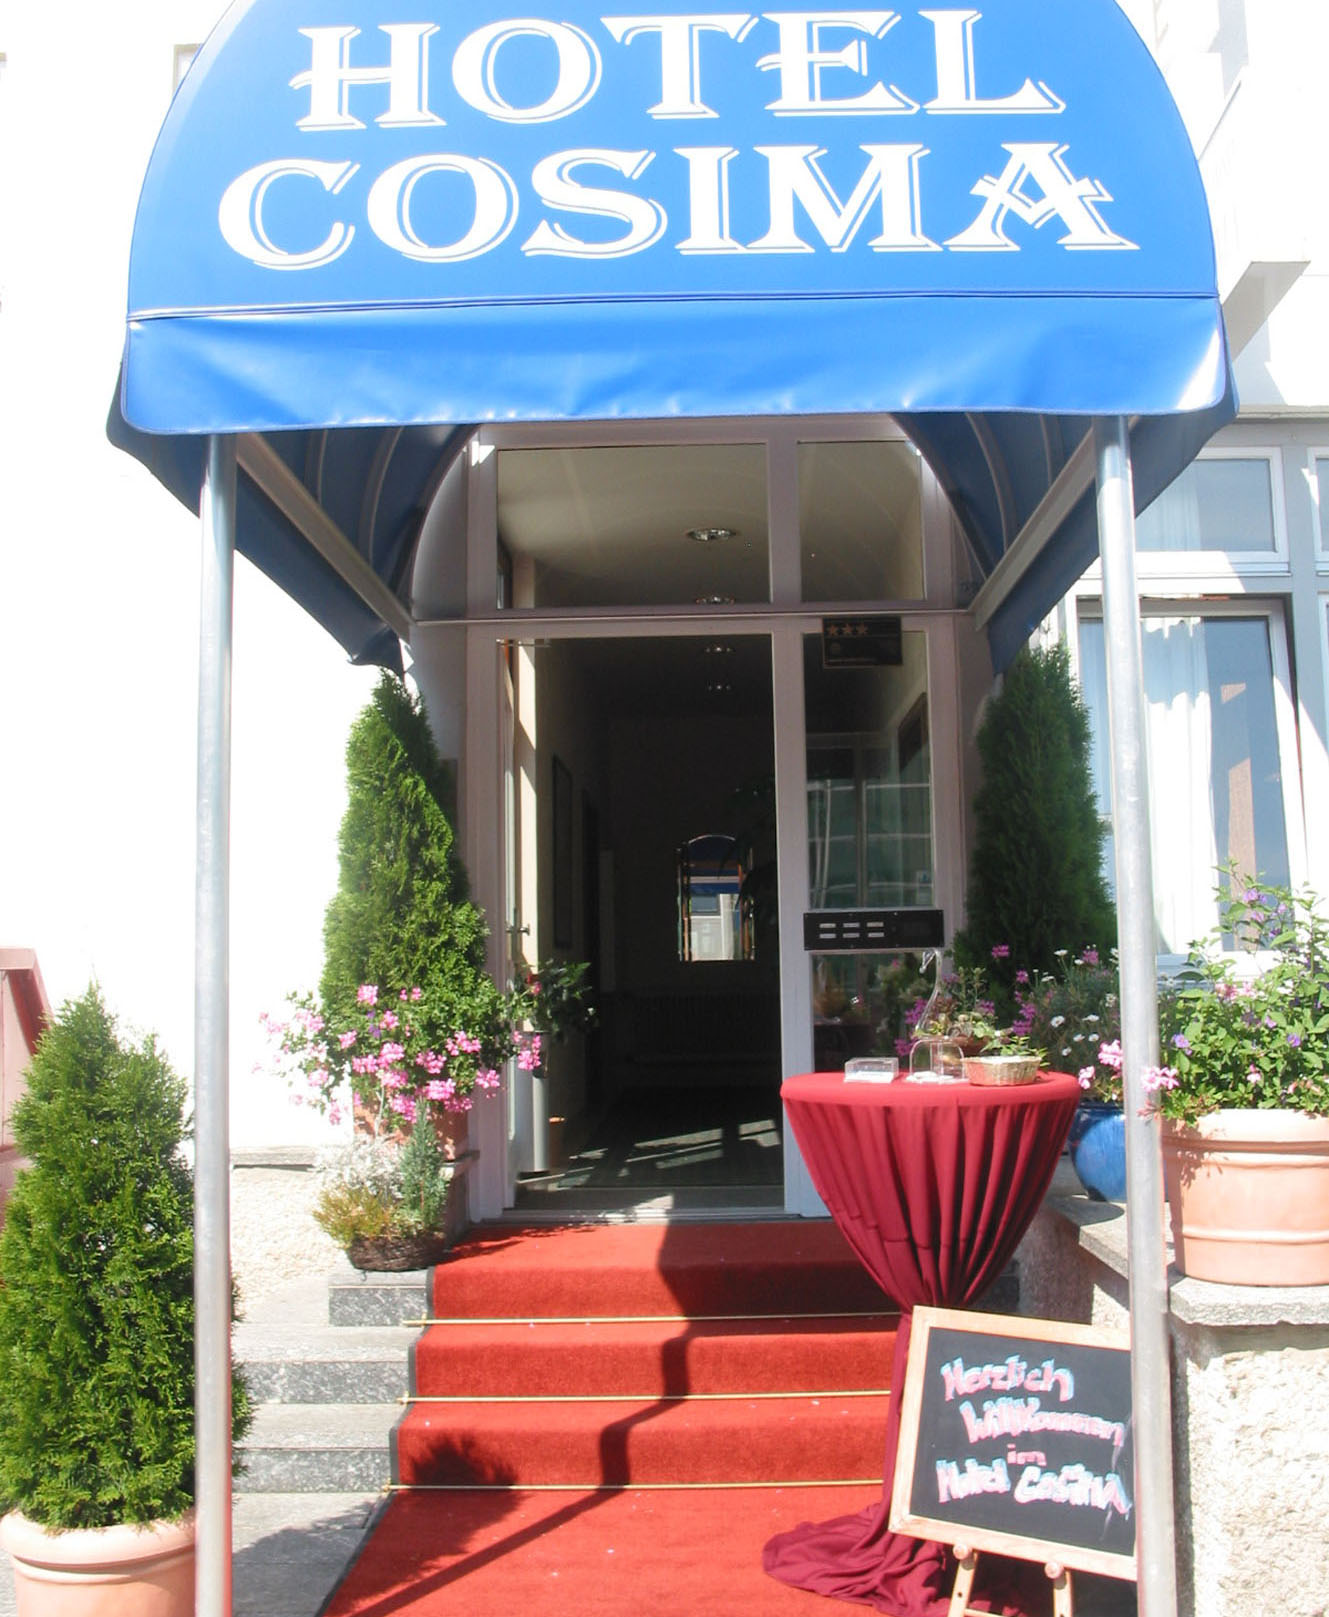 Cosima Hoteleingang ohne stars